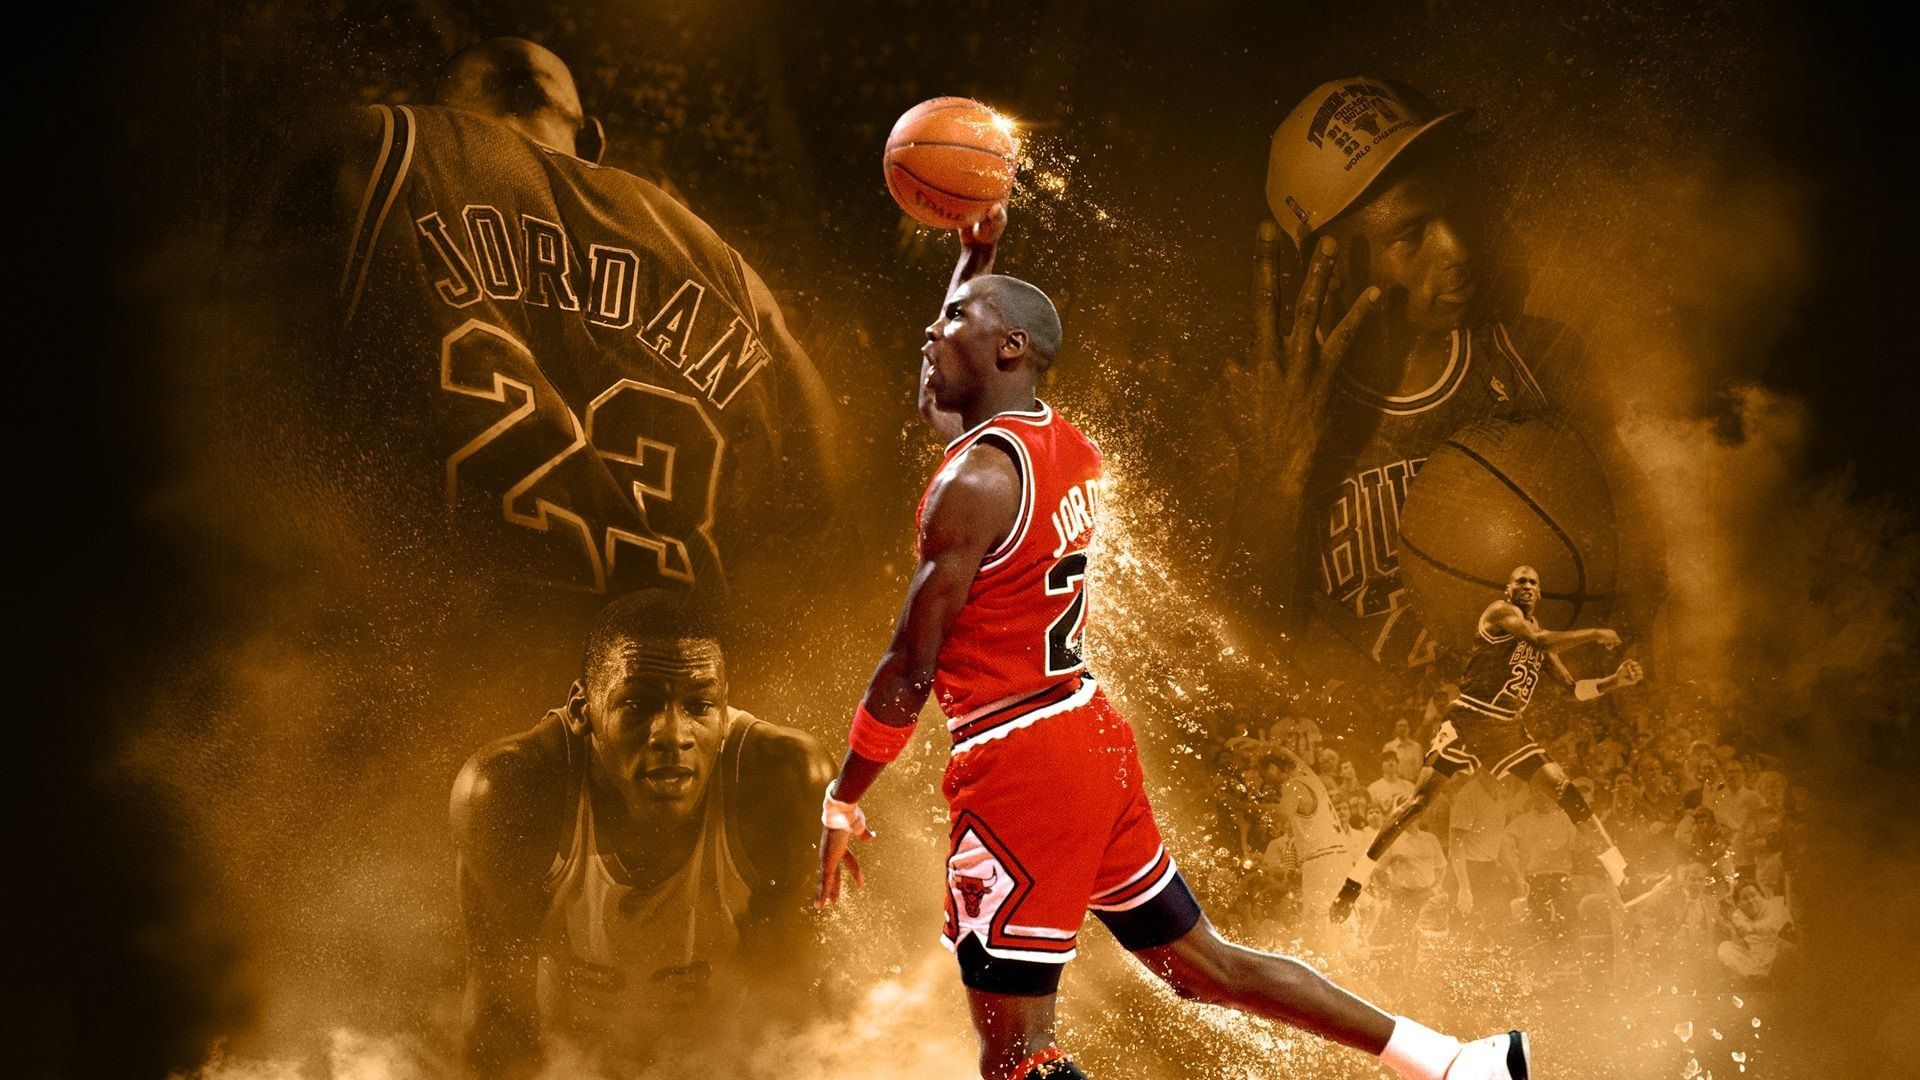 Michael Jordan is the best basketball player of all time - Michael Jordan